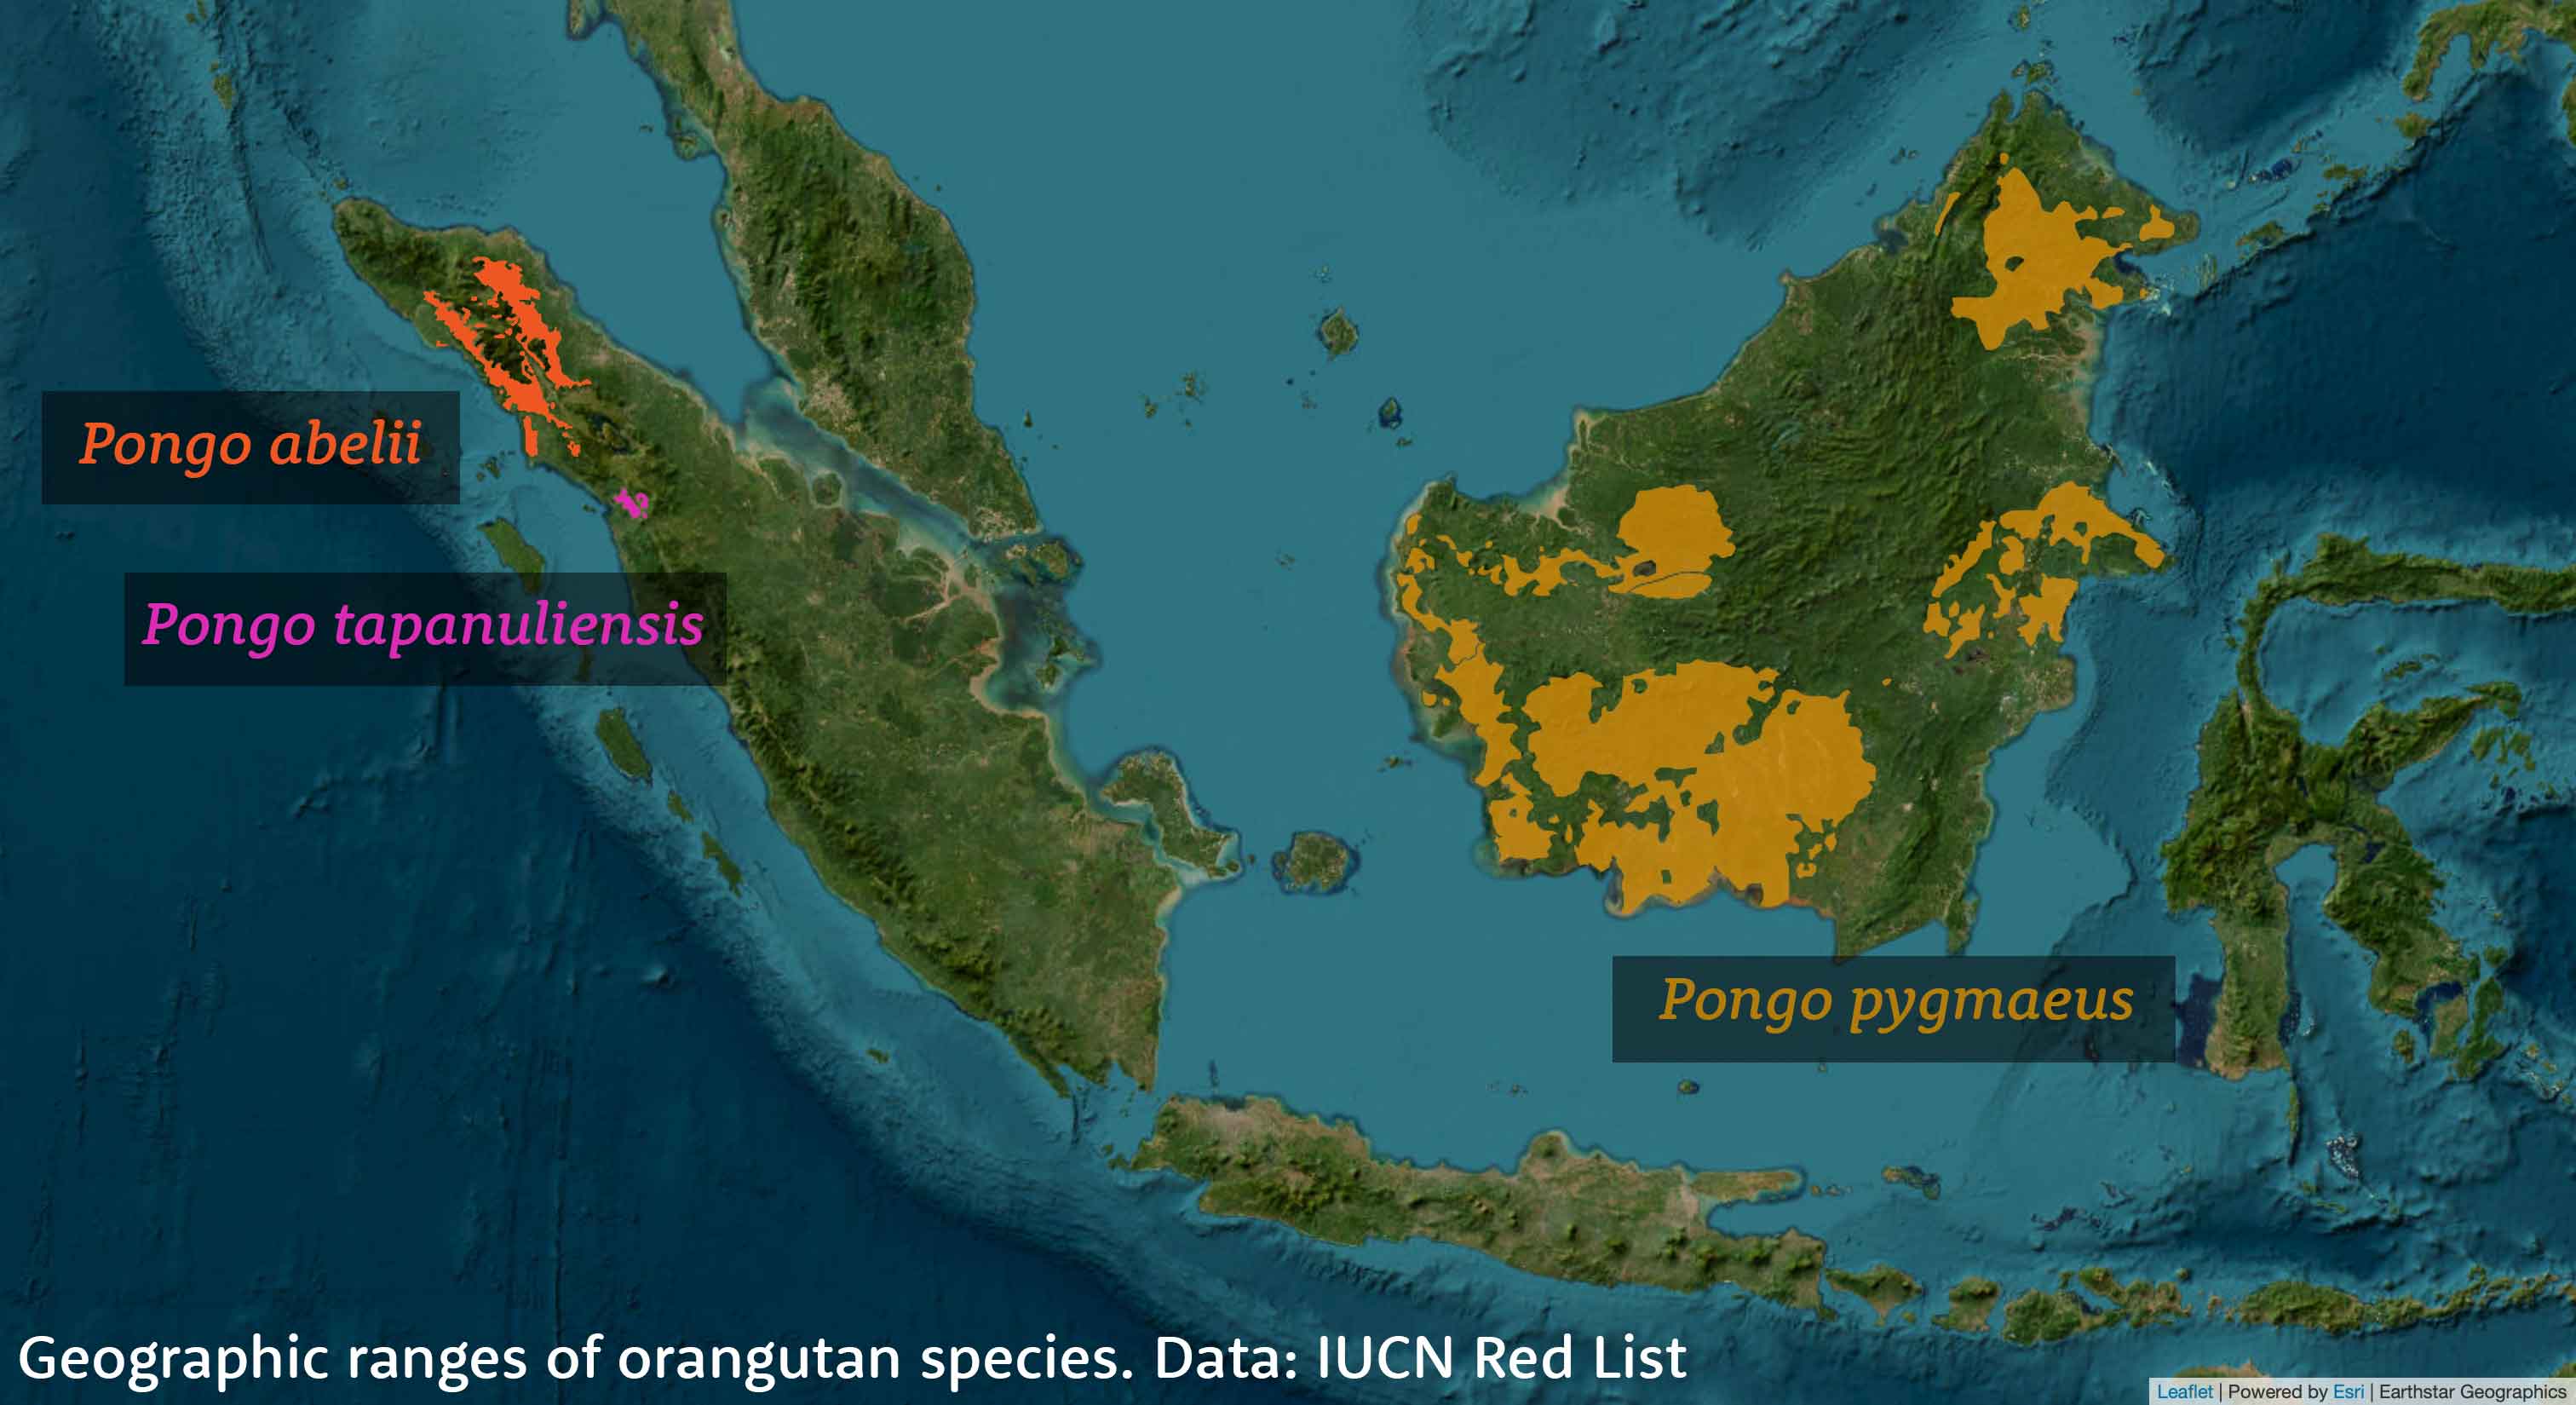 Map of Indonesia showing geographic range of orangutan populations on Sumatra and Borneo